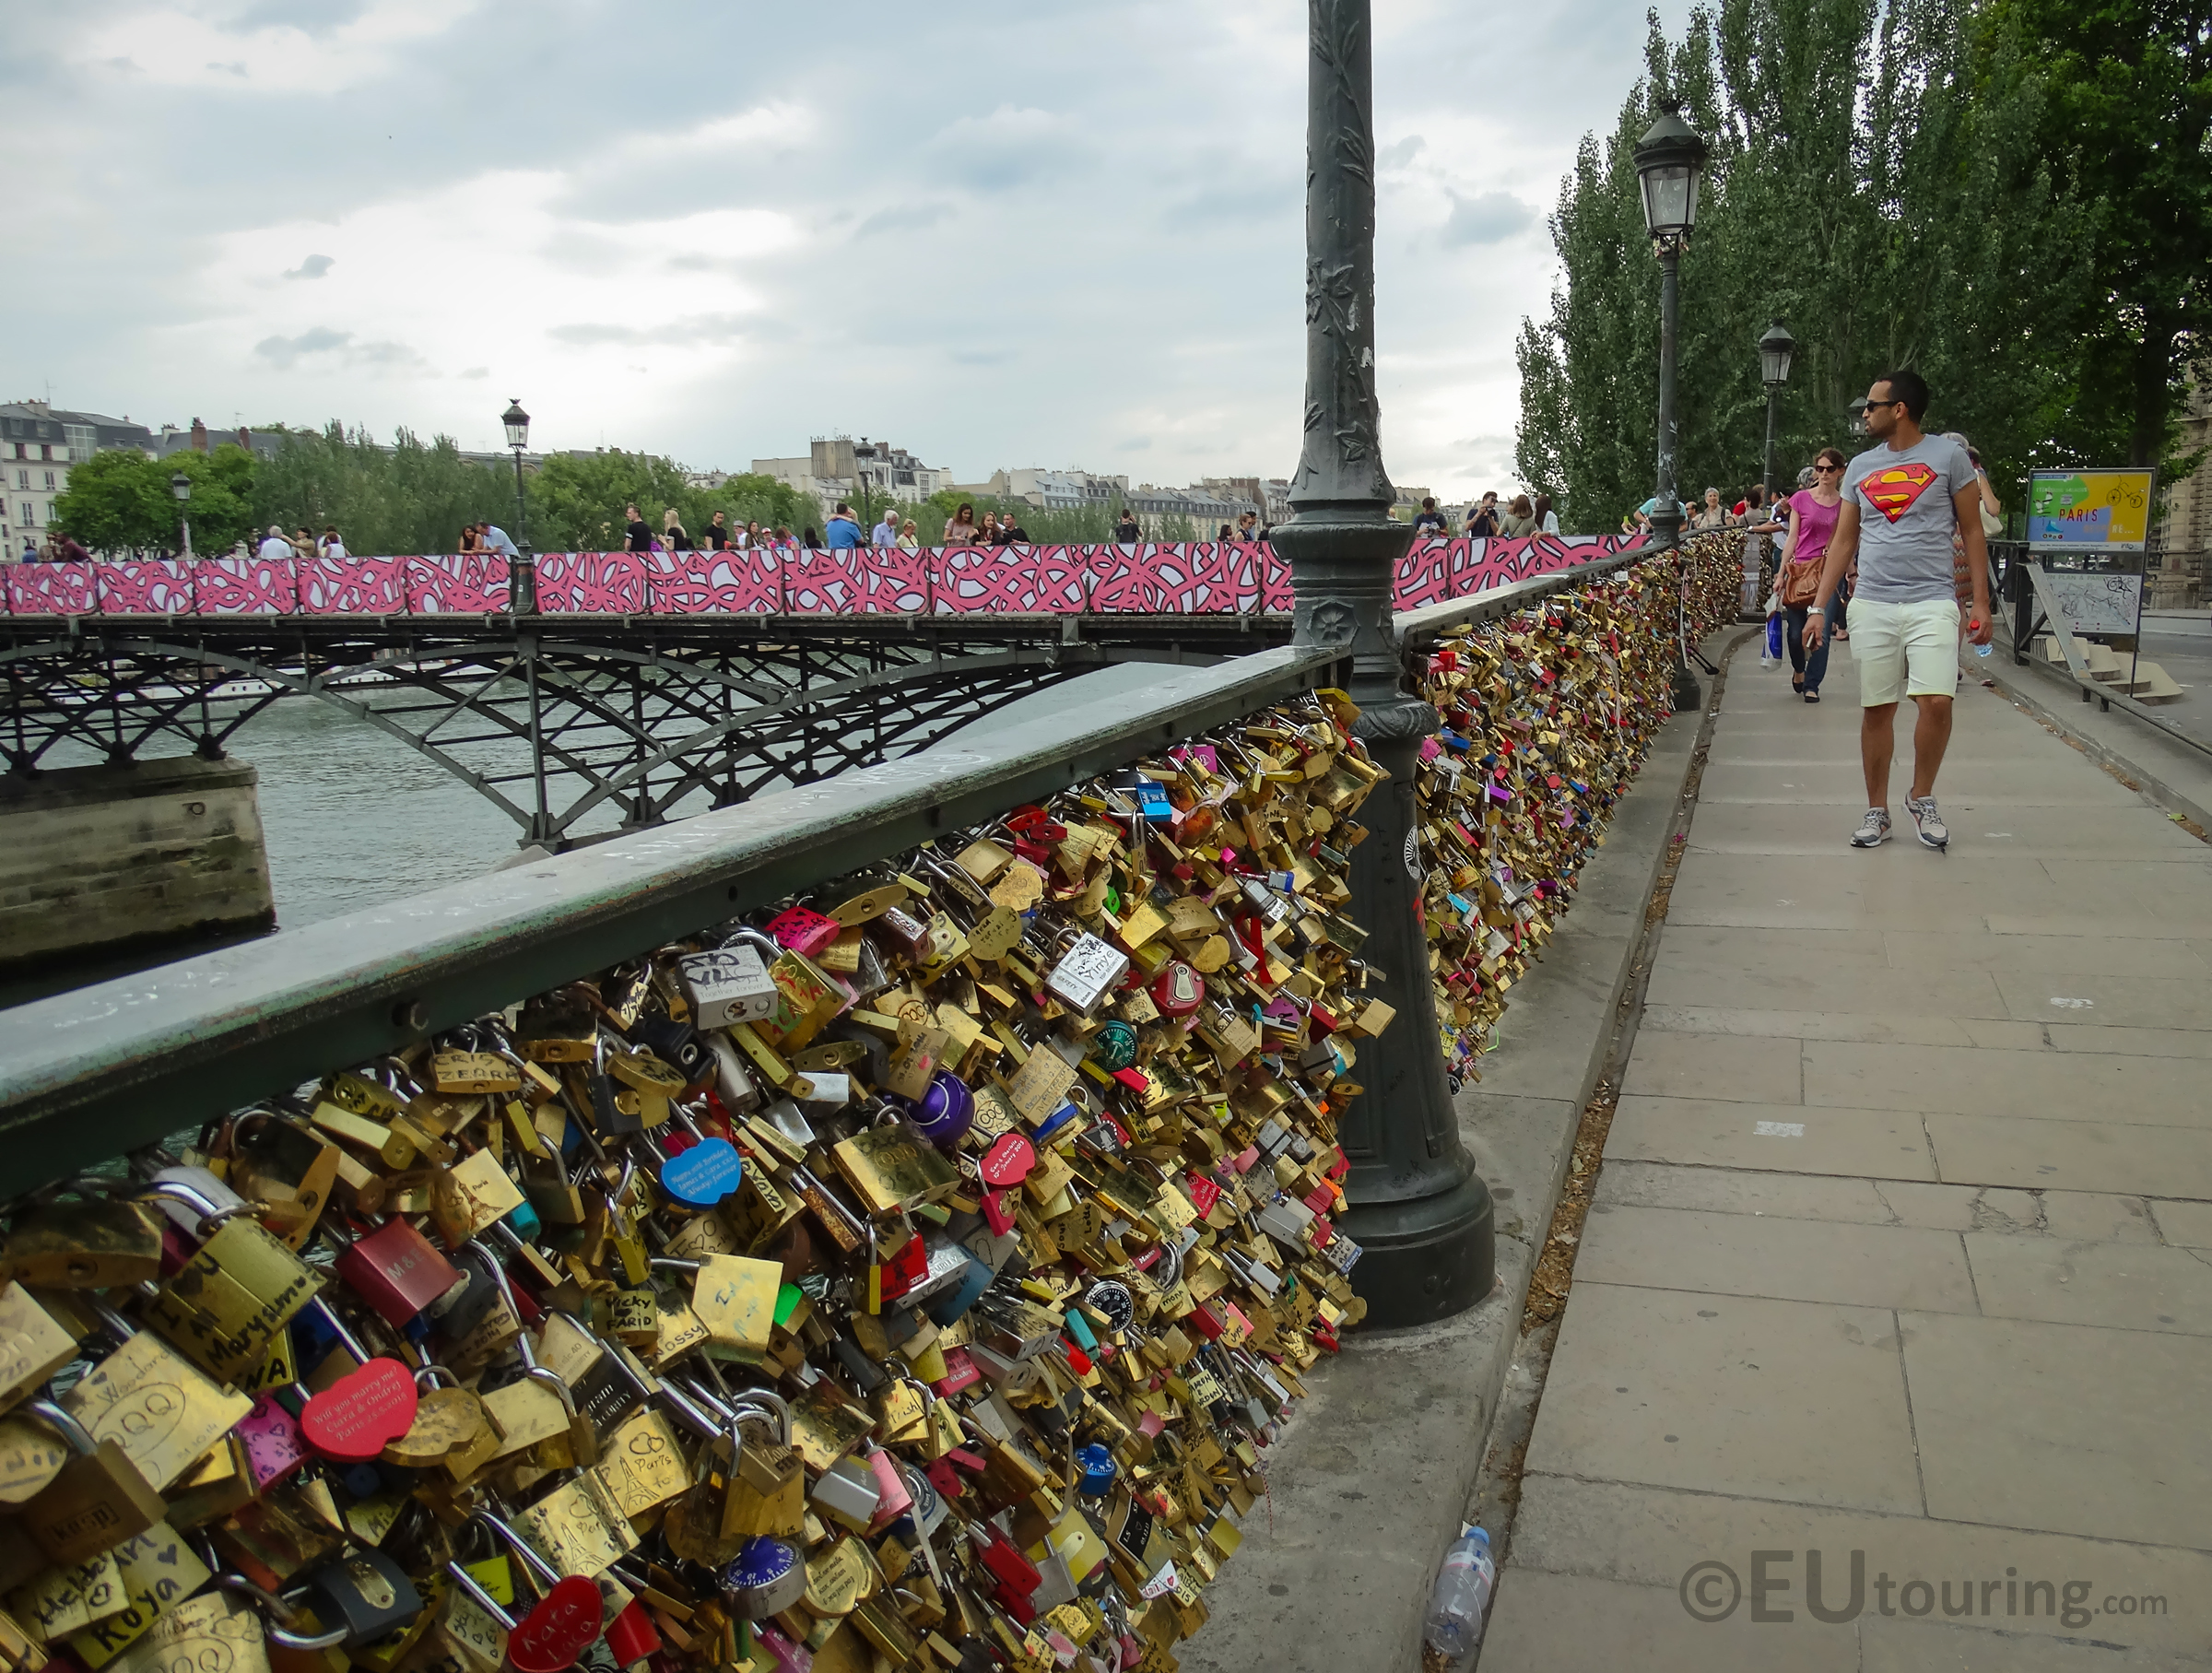 Real love locks and the bridge.